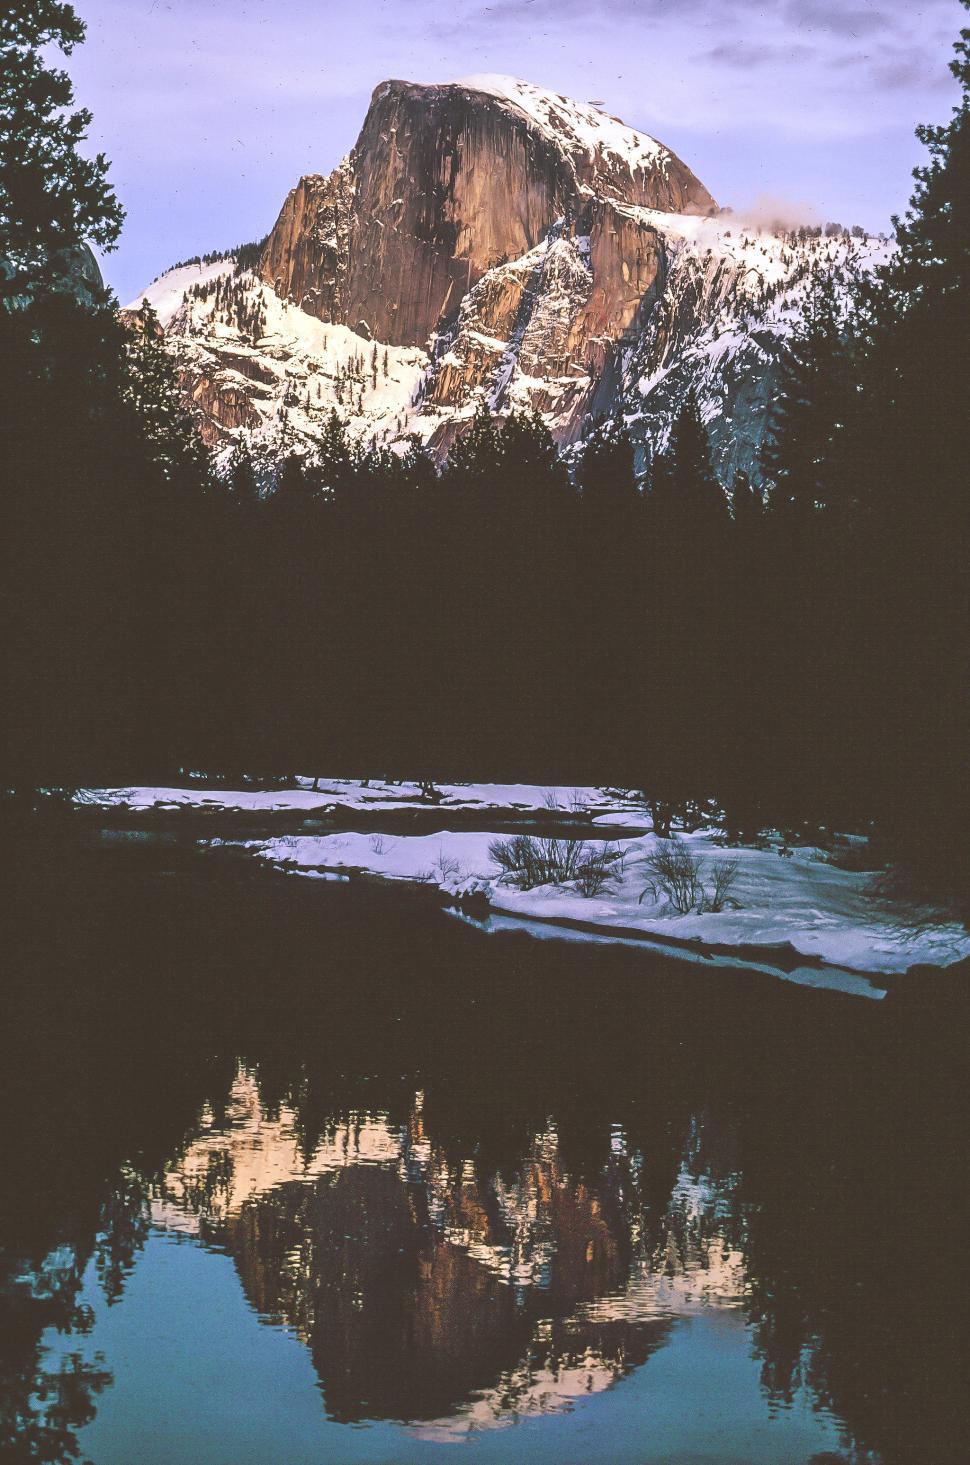 Free Image of Half Dome Rock and Mirror Lake 